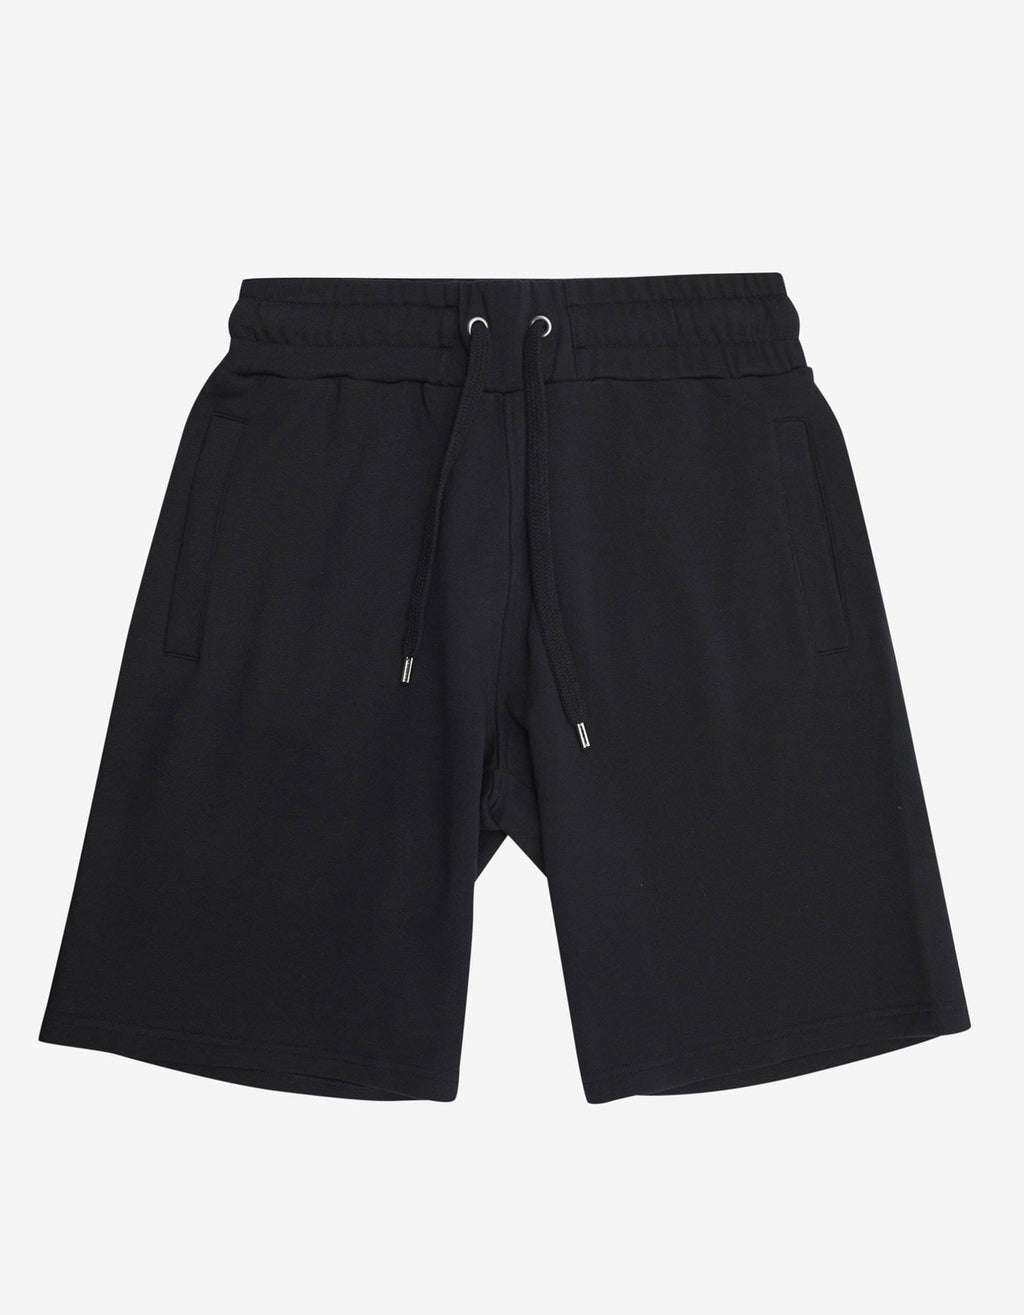 Kenzo Kenzo Black Logo Print Sweat Shorts